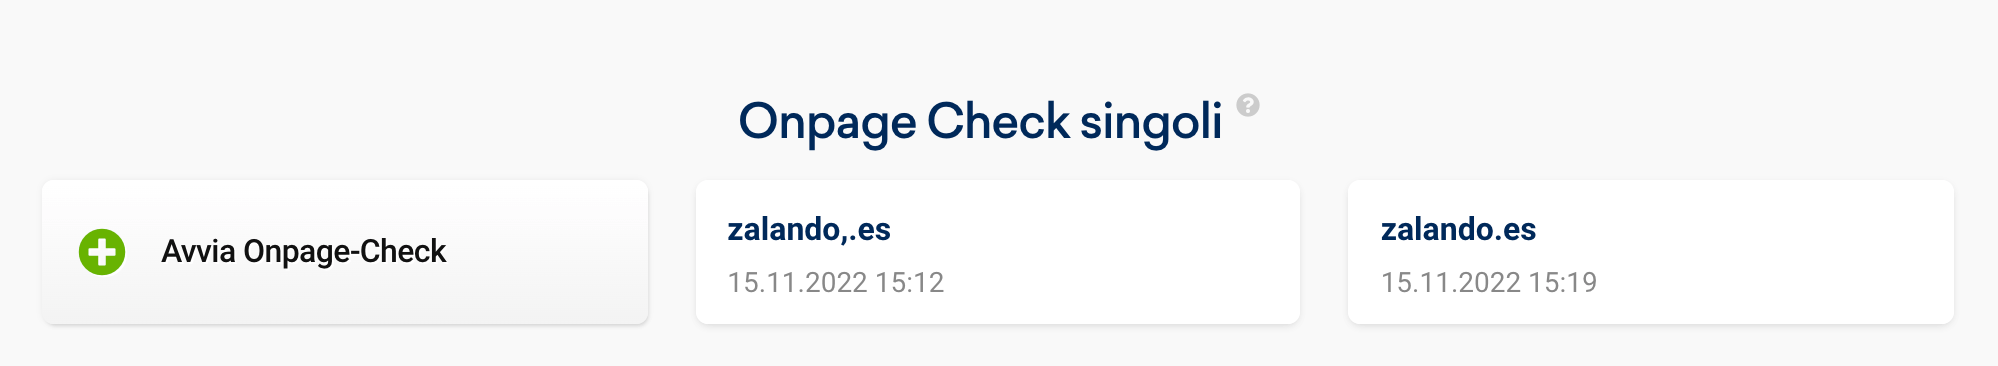 Onpage Check singoli nel Toolbox di SISTRIX